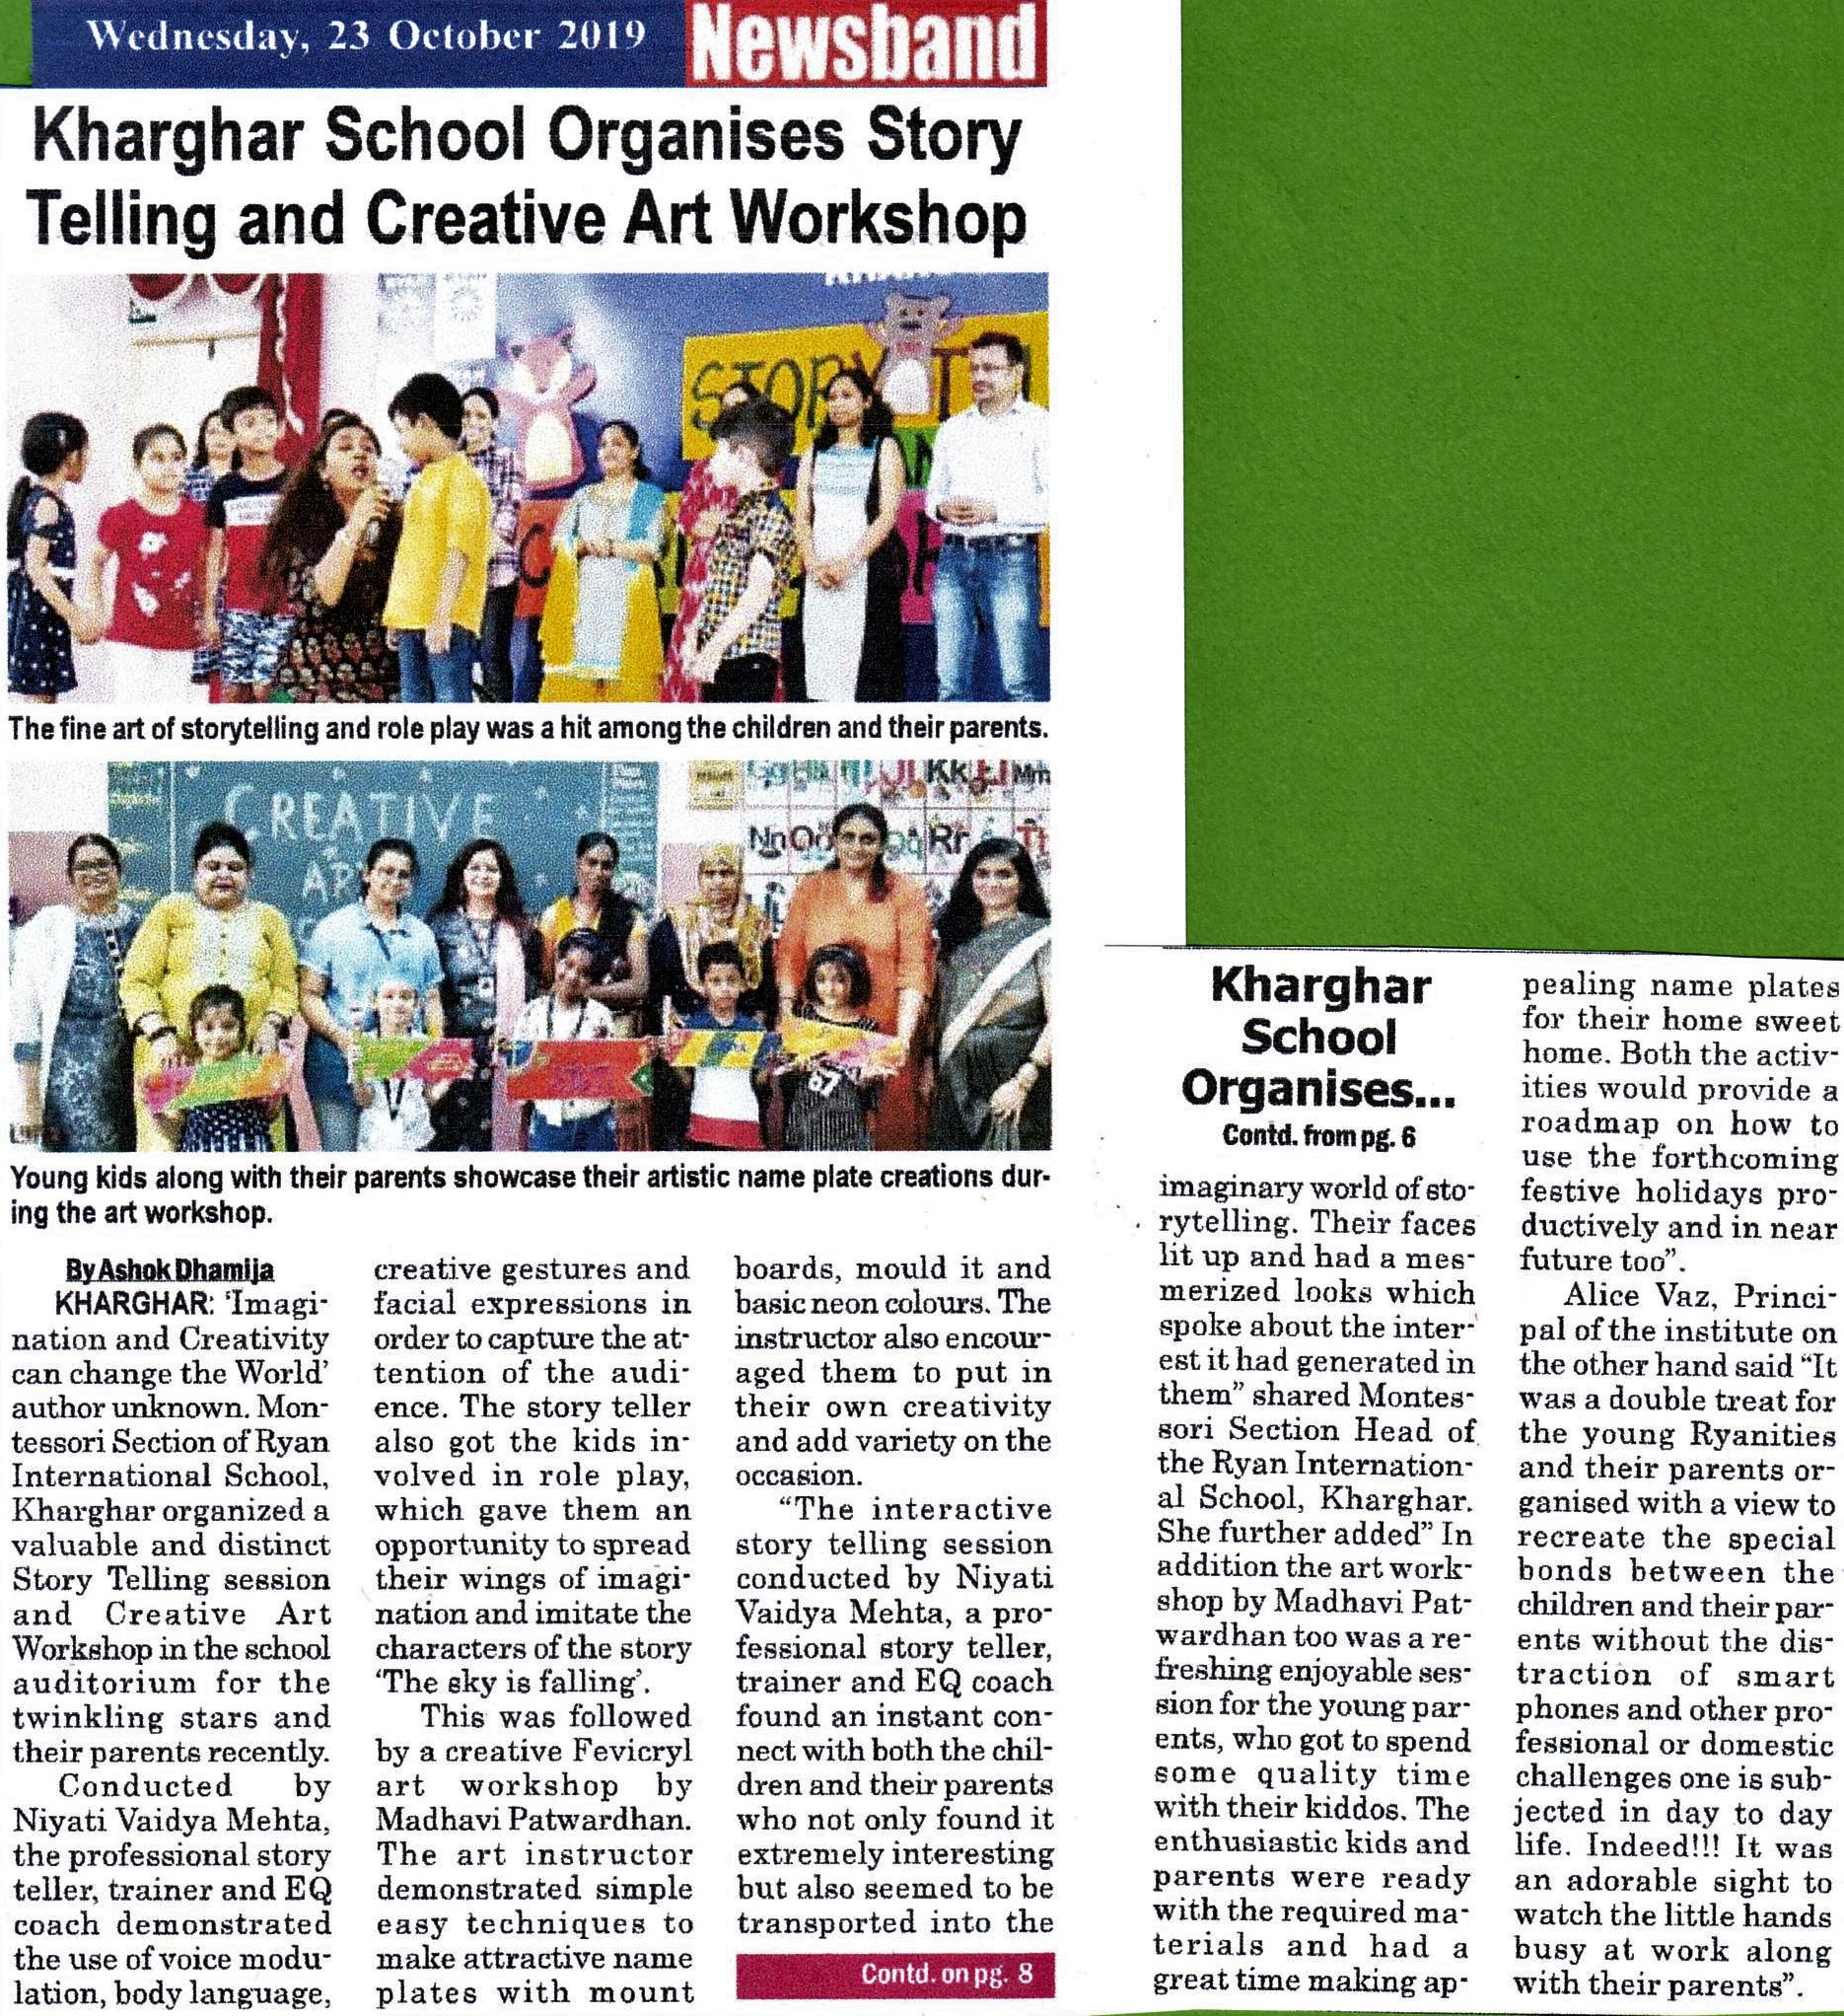 Kharghar School Organises Storytelling and Creative Art Workshop was mentioned in Newsband - Ryan International School, Kharghar - Ryan Group